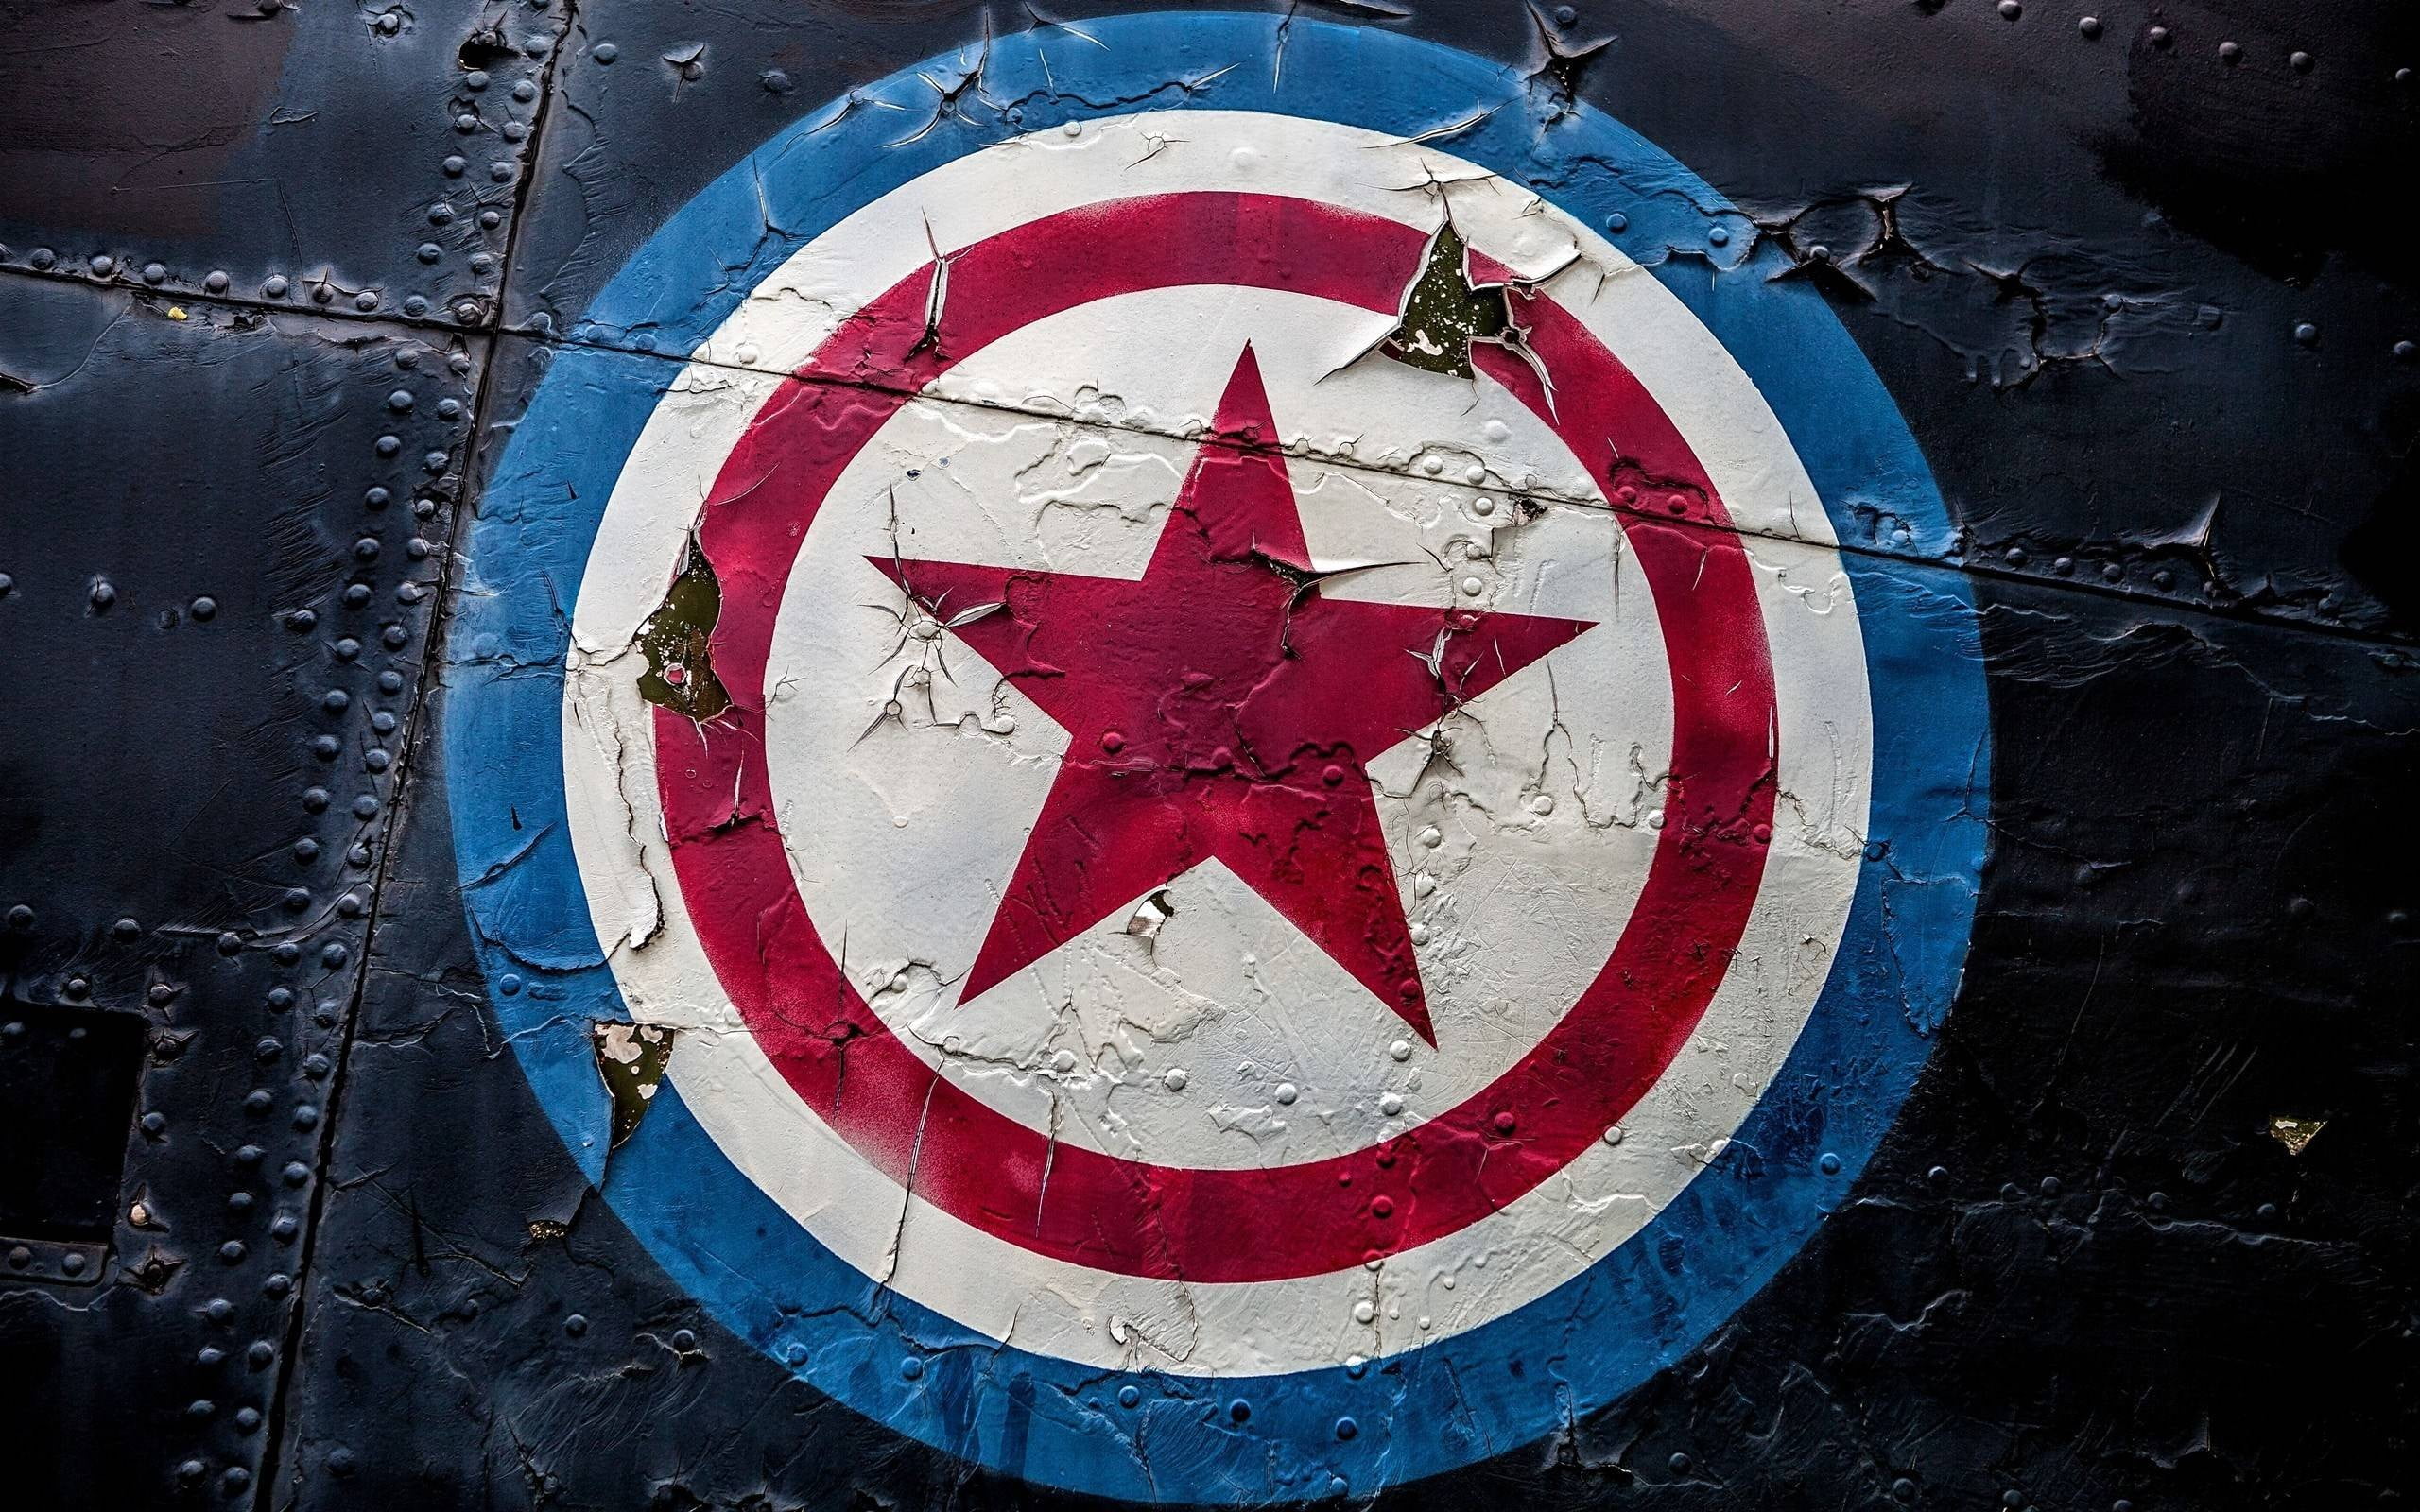 Captain America shield wall painting, metal, symbols, stars, Marvel Cinematic Universe